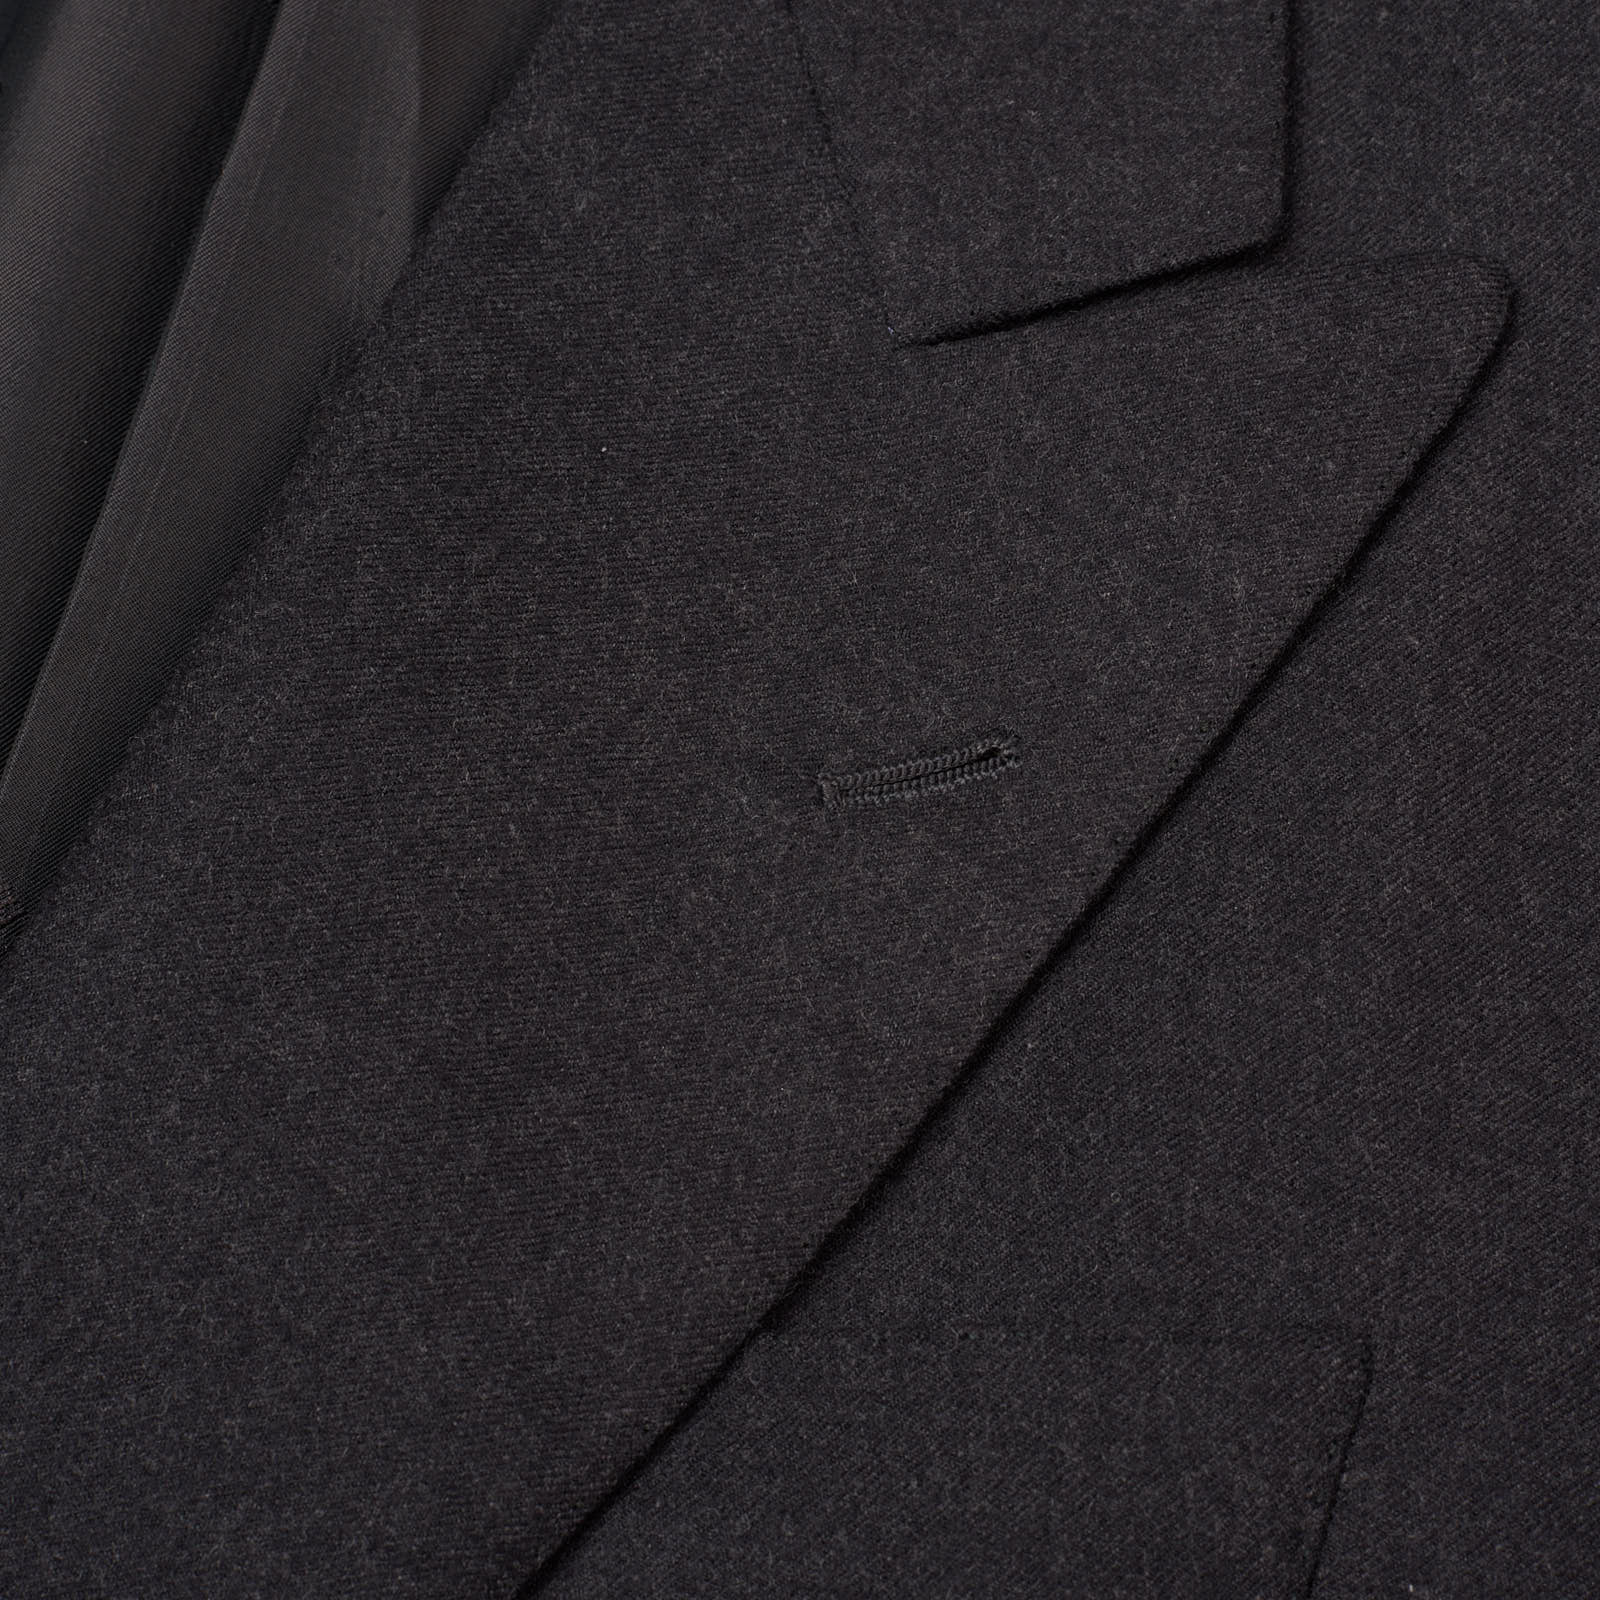 ABLA for Vannucci Dark Gray Wool Handmade 3 Piece Morning Suit Suit EU 46 NEW US 36